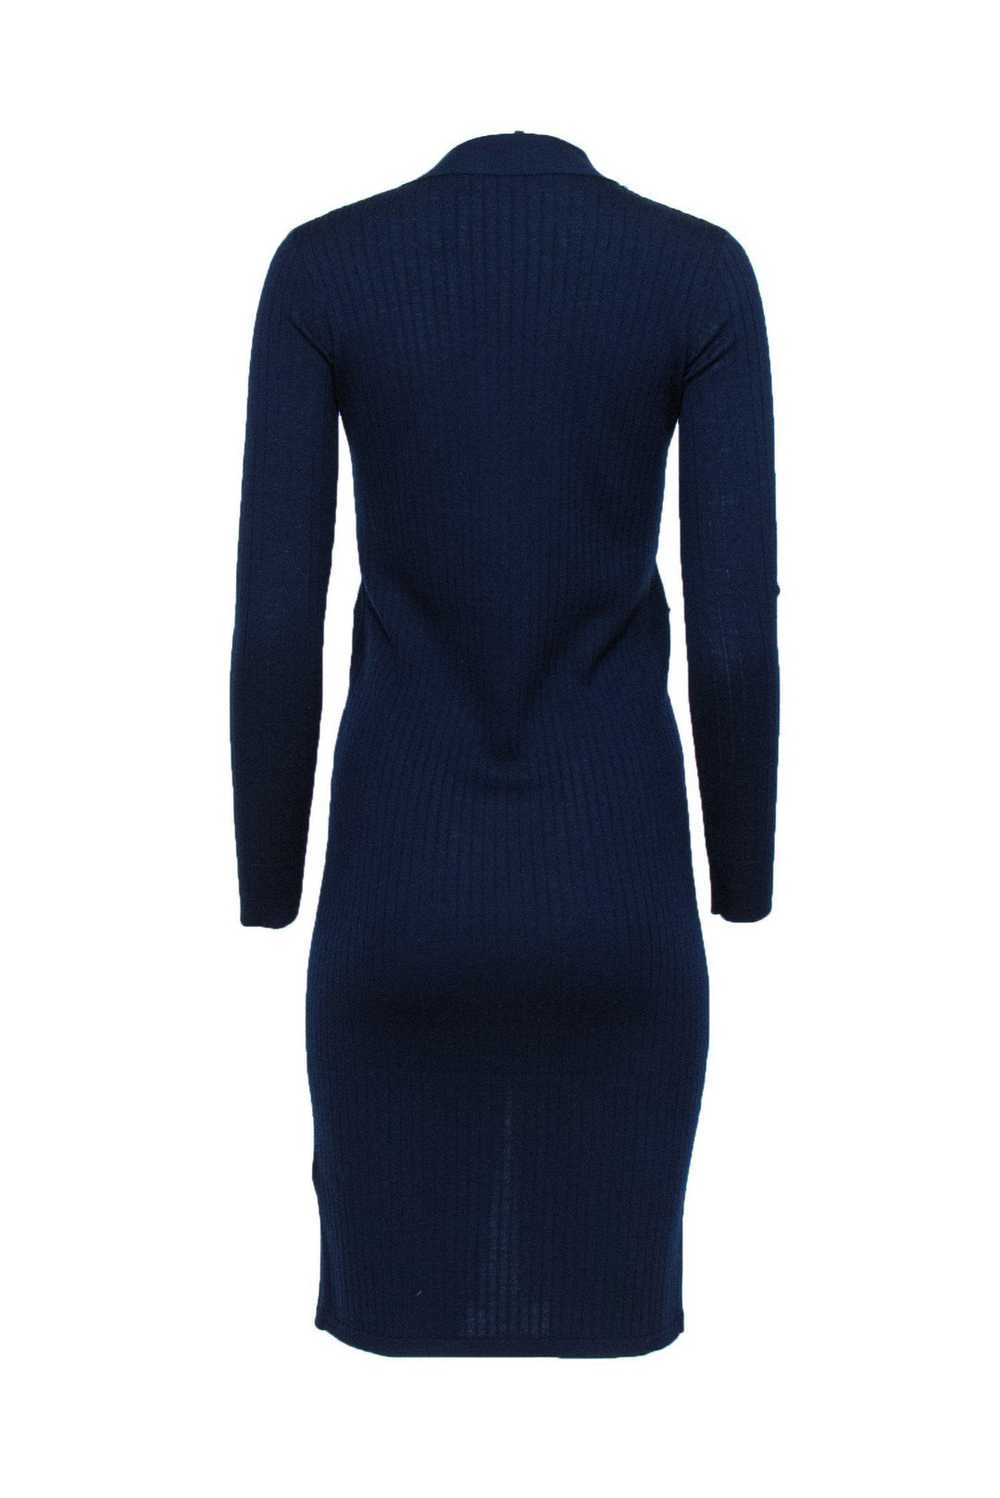 MO&Co. - Navy Blue Ribbed Knit Midi Dress w/ Butt… - image 3